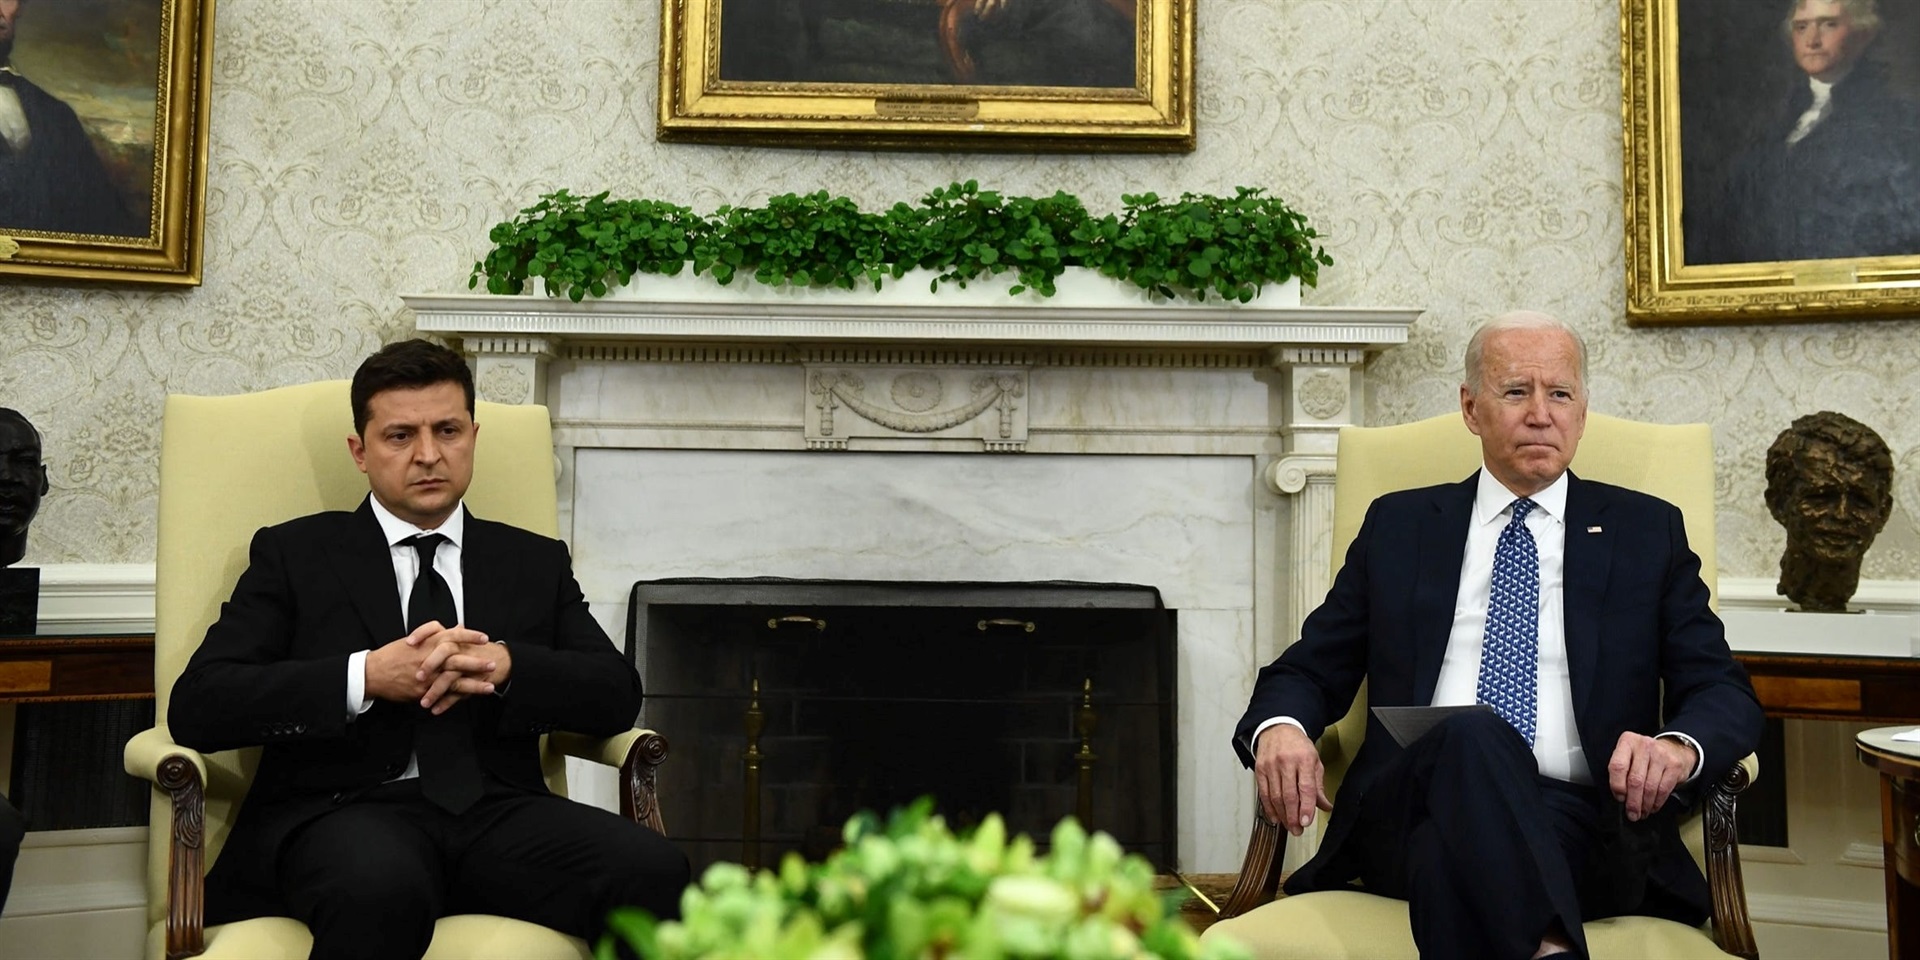 US President Joe Biden meets with Ukraine's President Volodymyr Zelenskyy in the Oval Office of the White House, on September 1, 2021. BRENDAN SMIALOWSKI/AFP via Getty Images